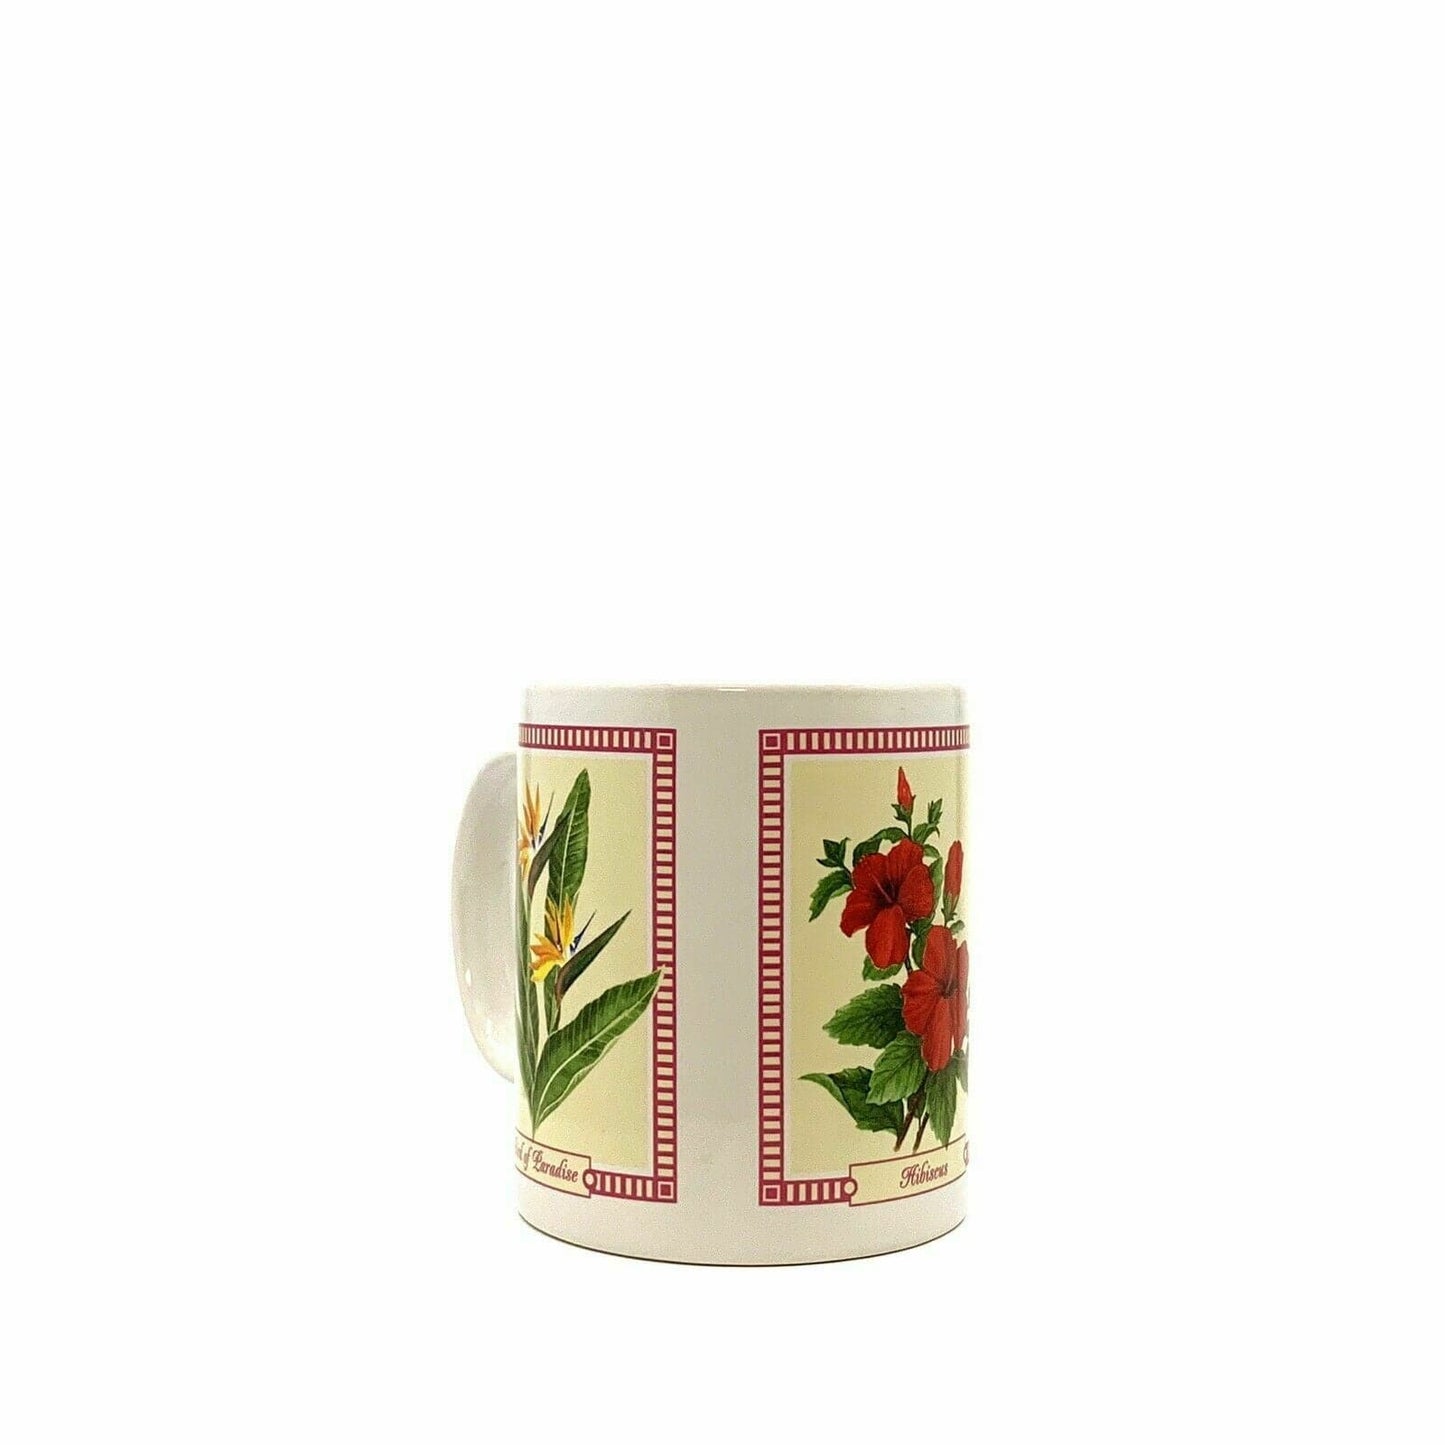 Captivating Hilo Hattie Coffee Mug - Tropical Flowers - Very Good Condition